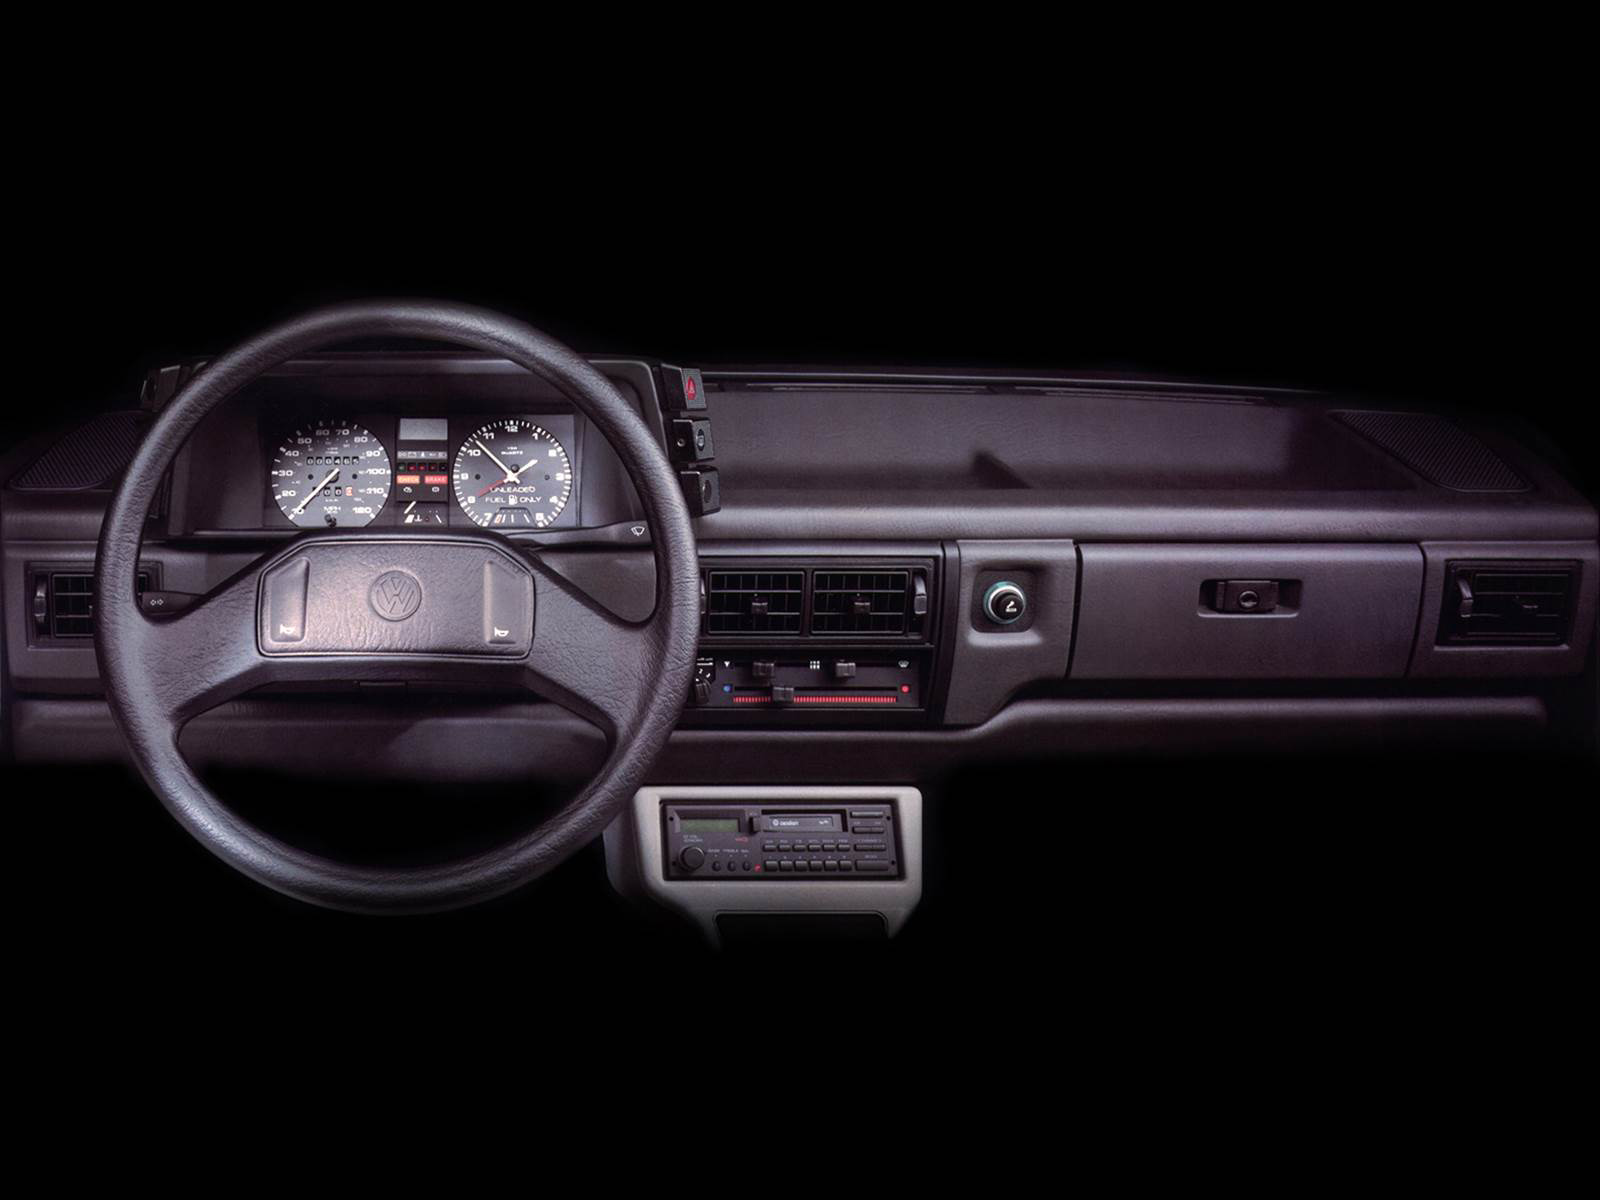 volkswagen voyage novo interior 1988 com painel satelite